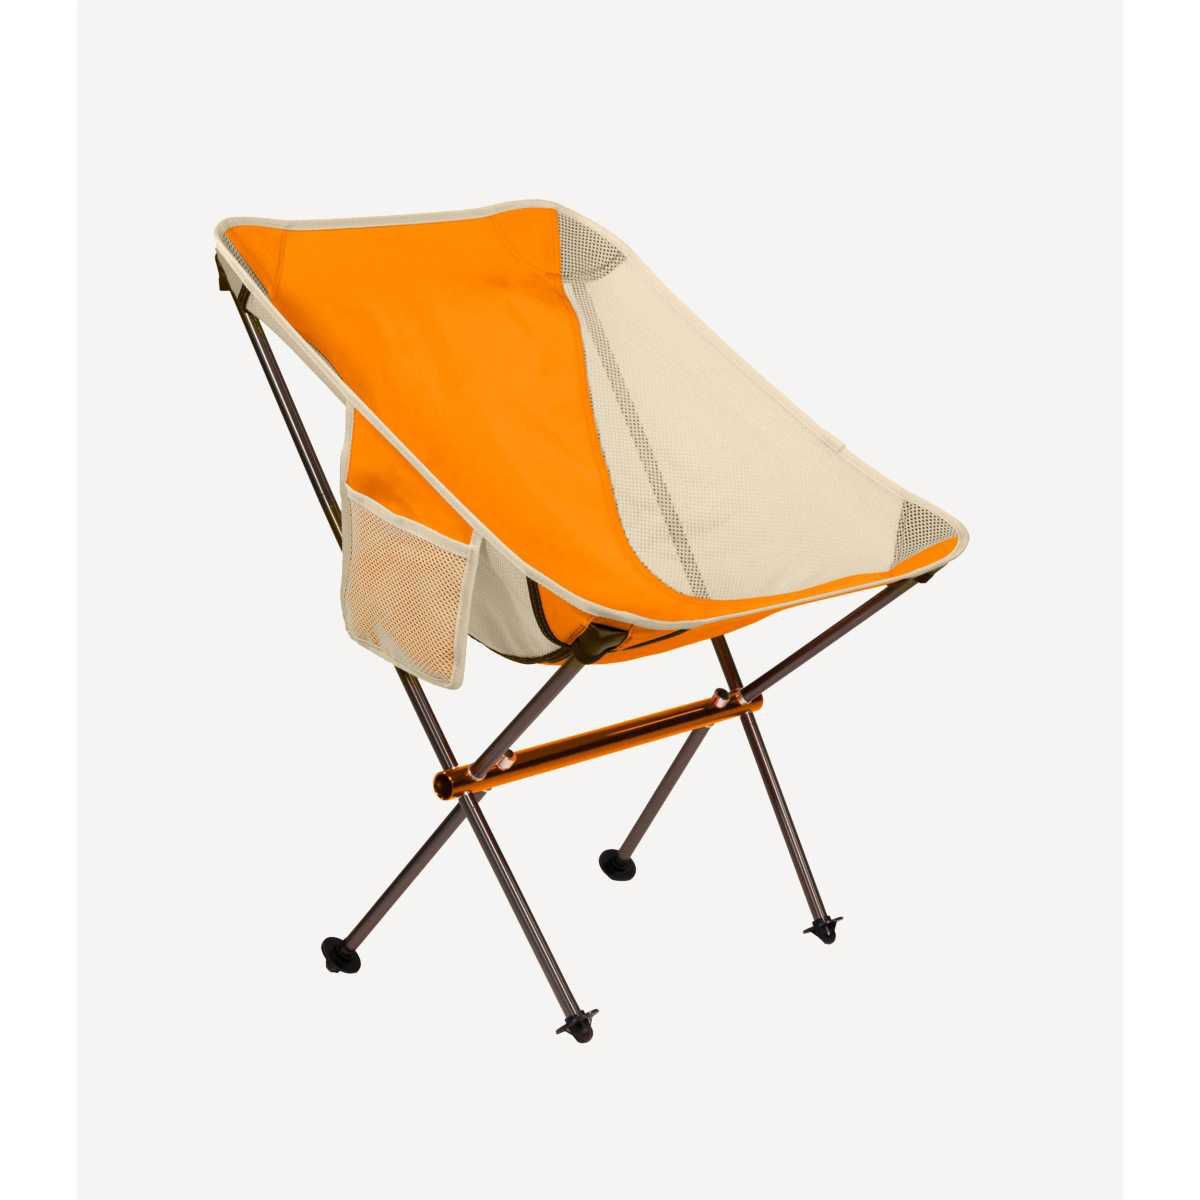 KLYMIT Ridgeline Short Camp Chair Campingstuhl Orange - 12RSOR01B